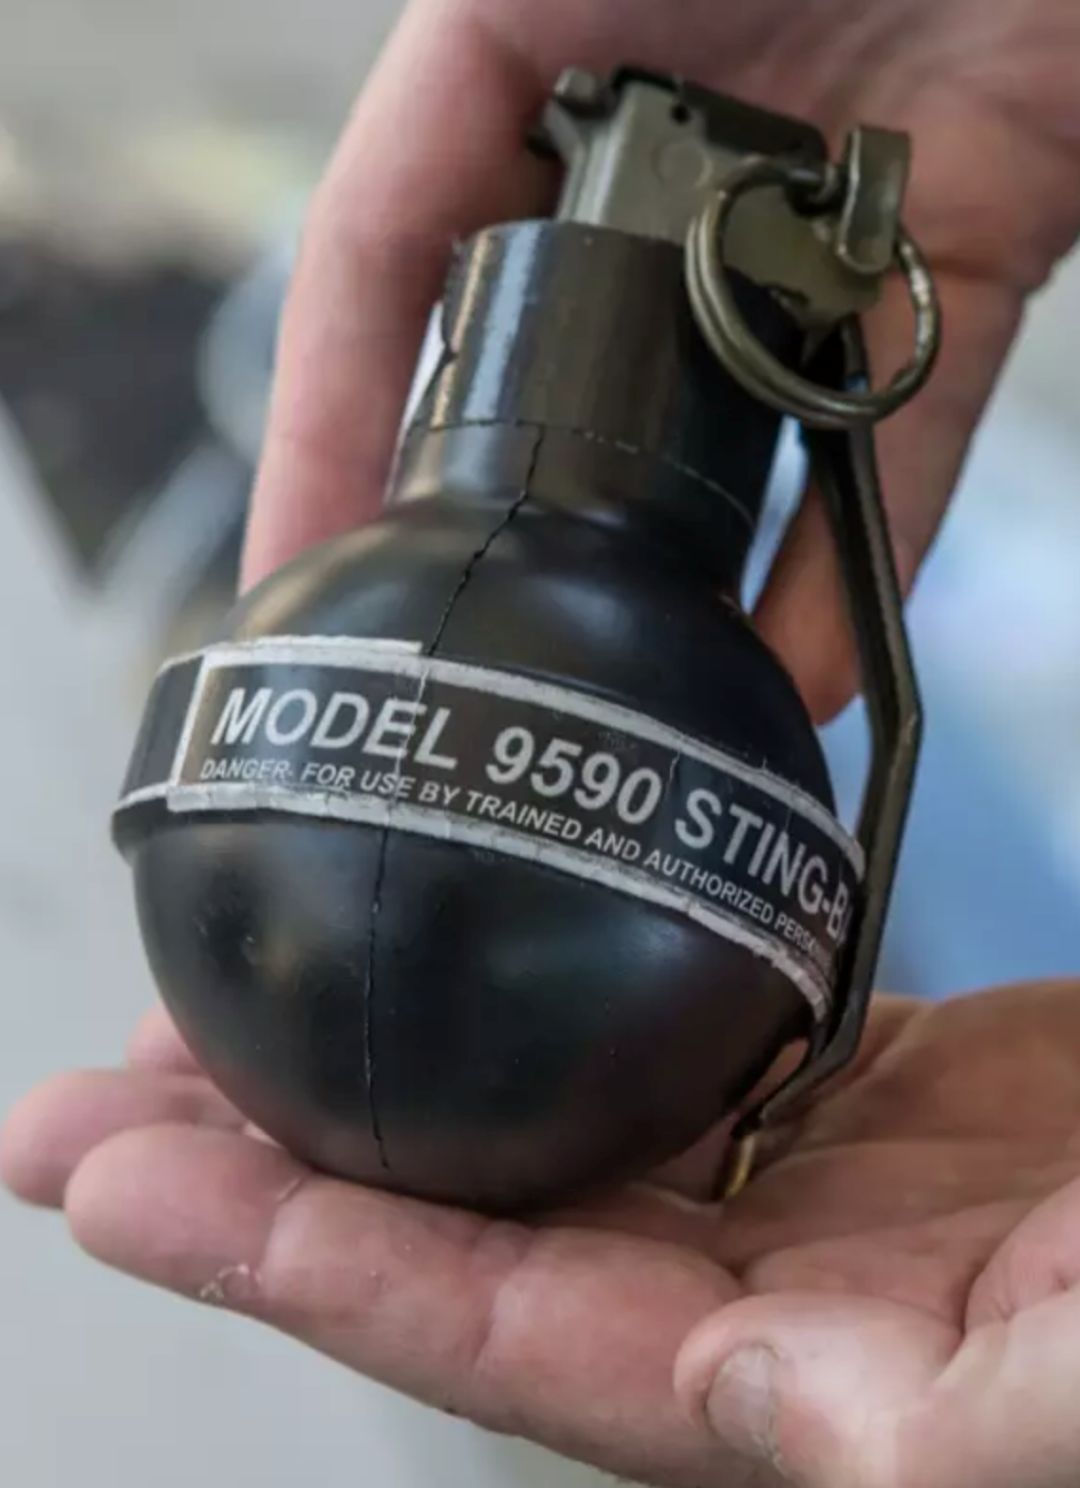 stinger手榴弹人们应该知道我们有这些设备,并会使用到它们,ashton